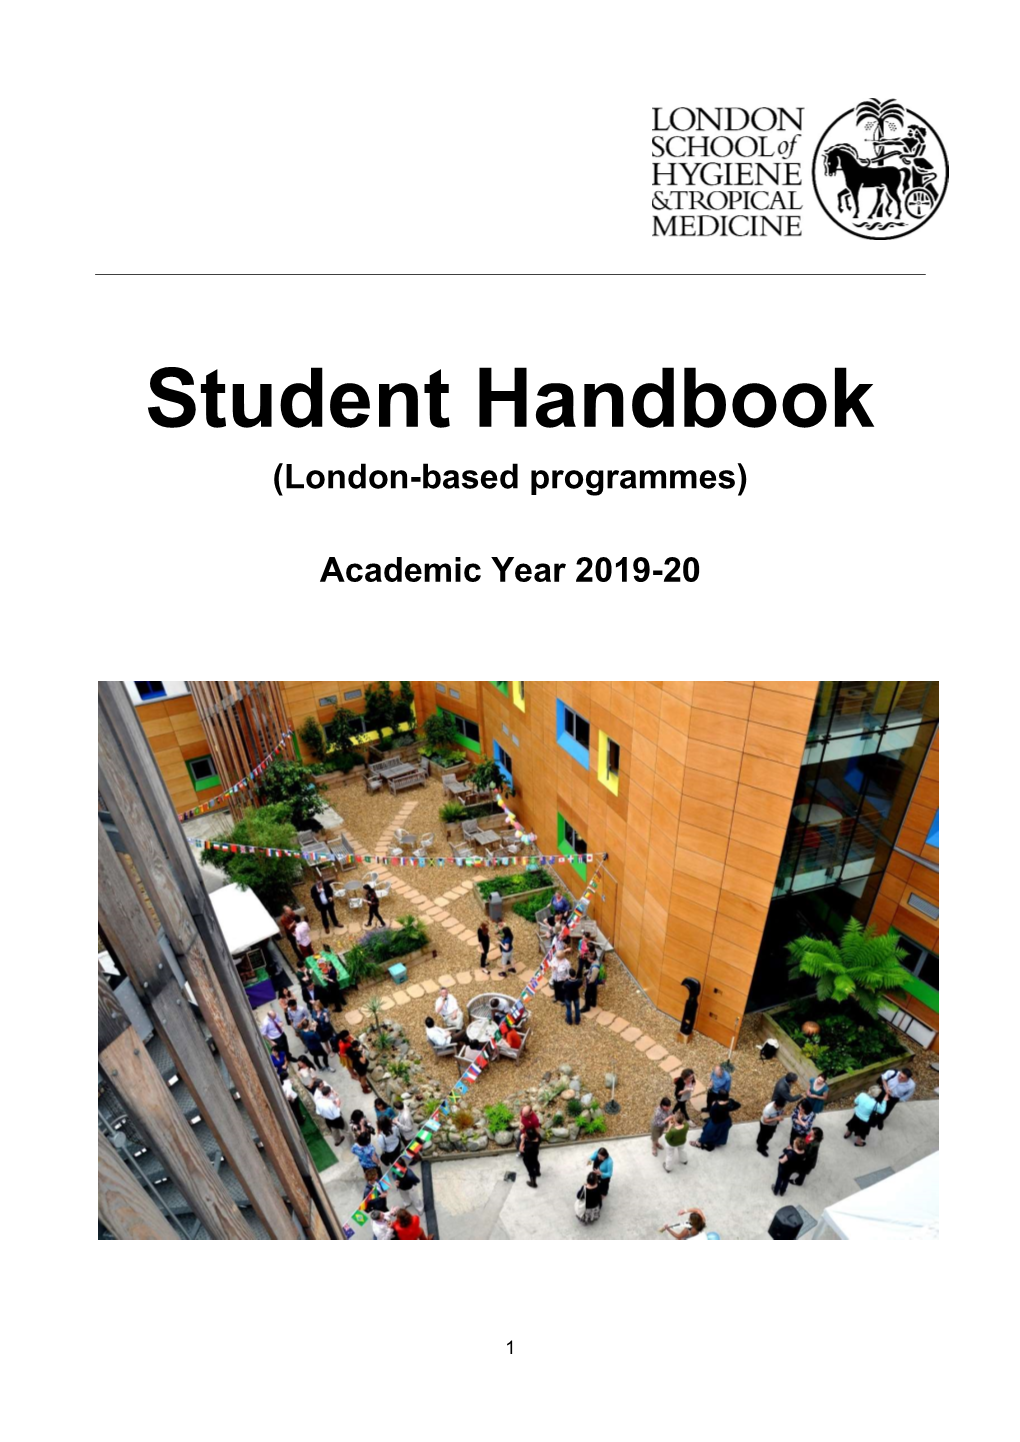 Student Handbook (London-Based Programmes)